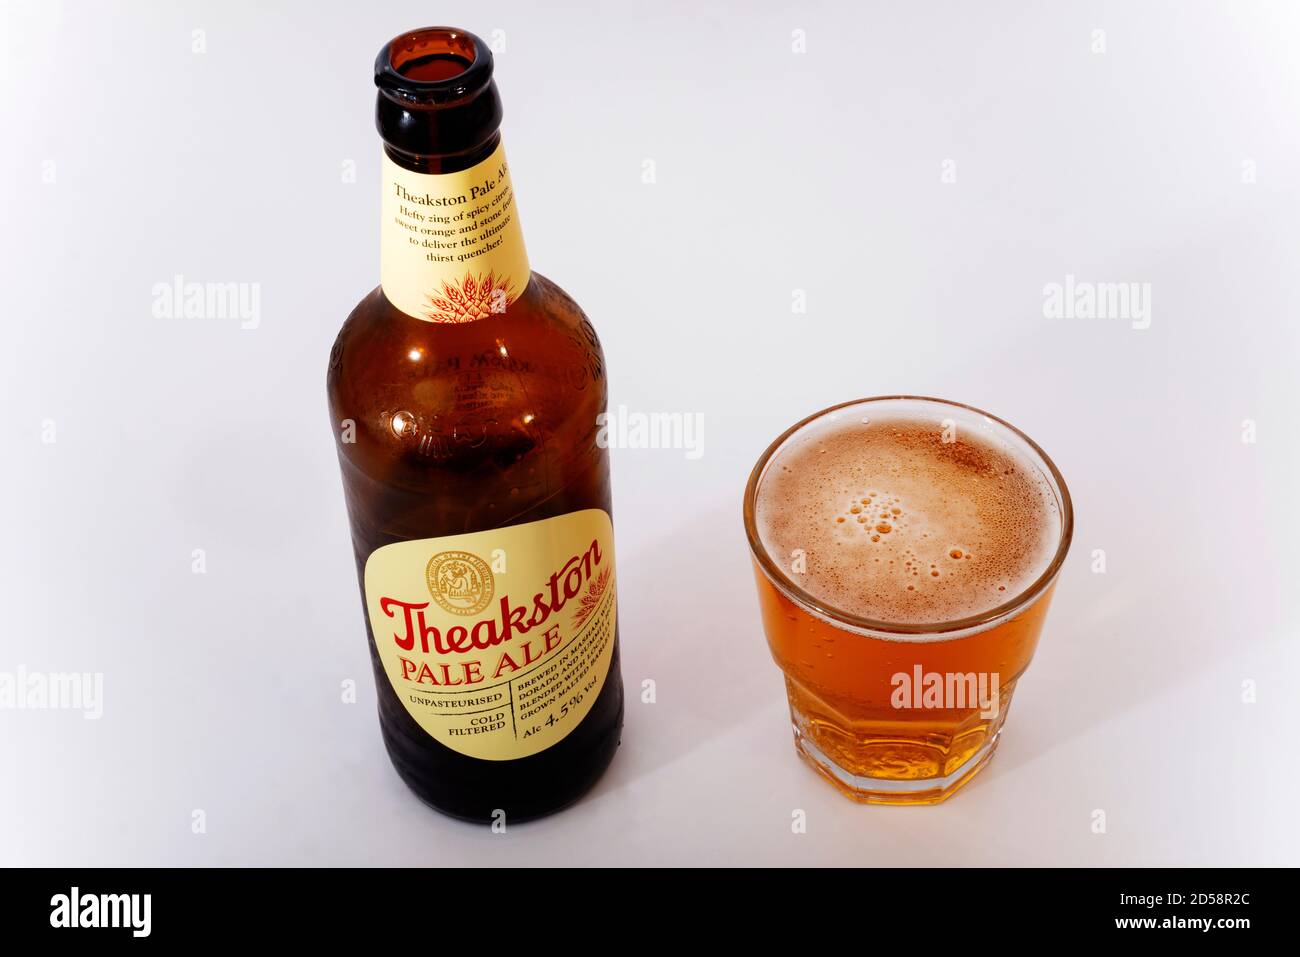 Theakston pale ale Stock Photo